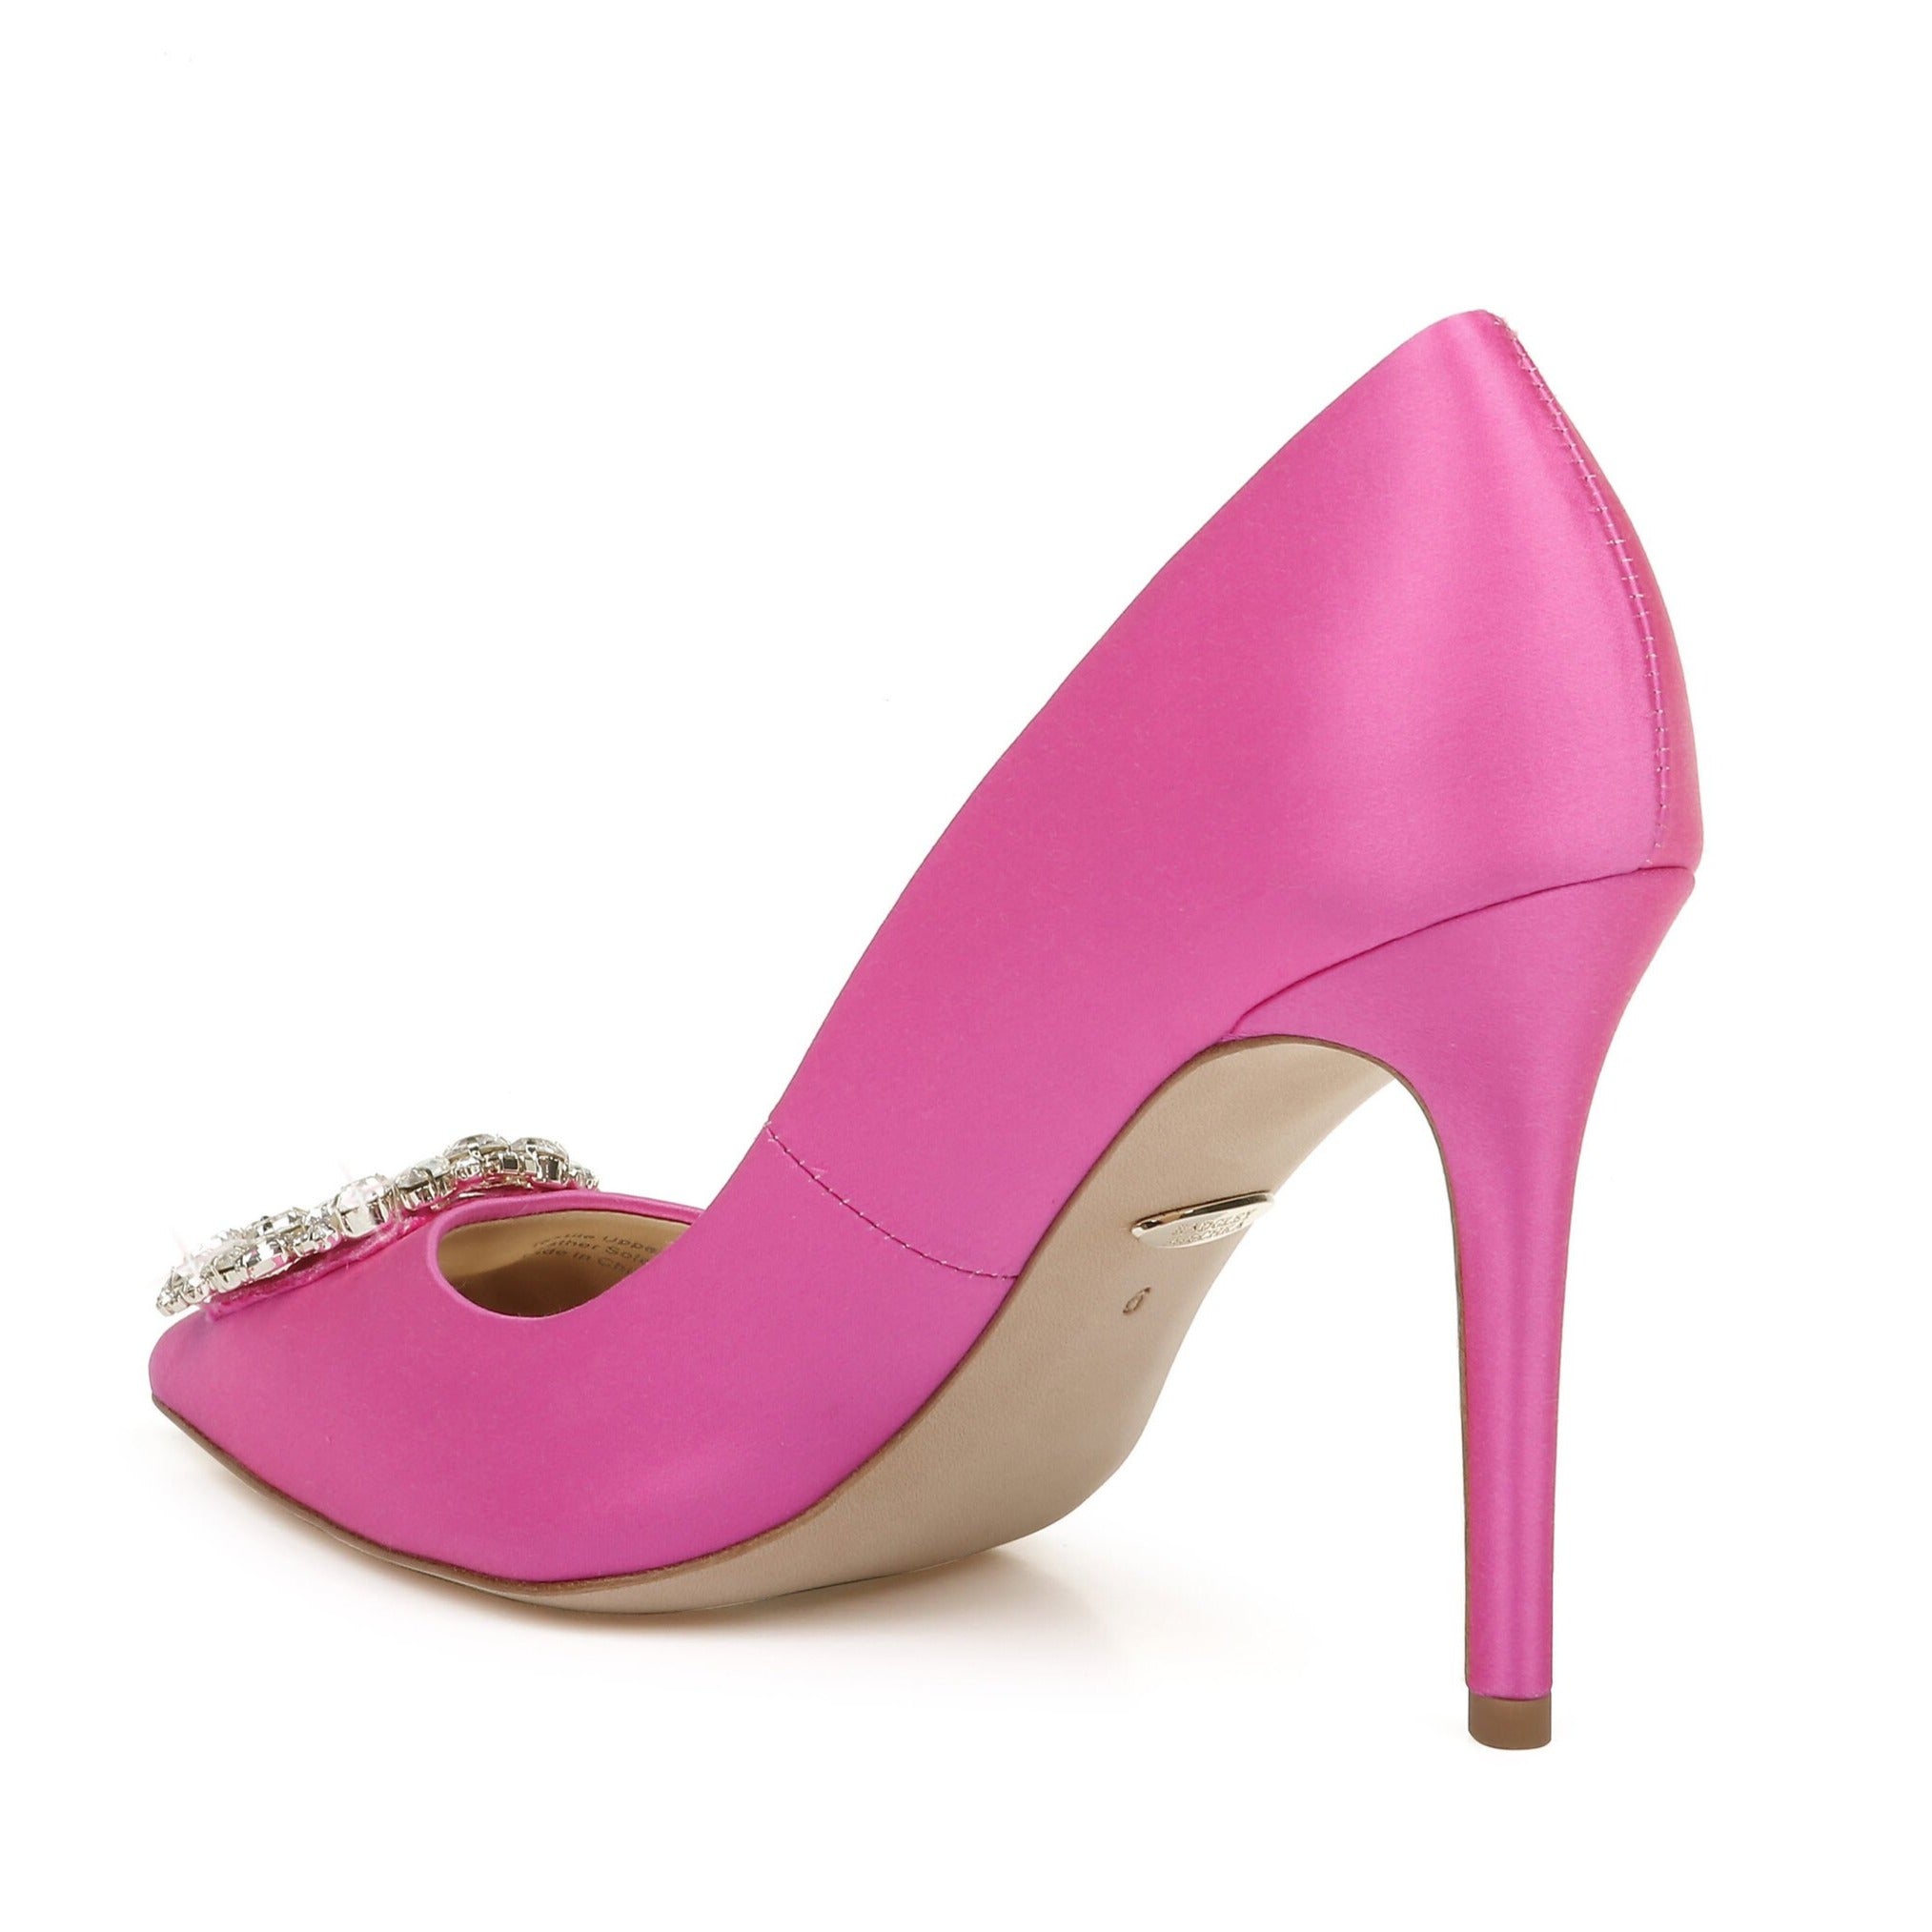 Badgley Mischka Cher Buckle Pointed Wedding Shoes - Pink